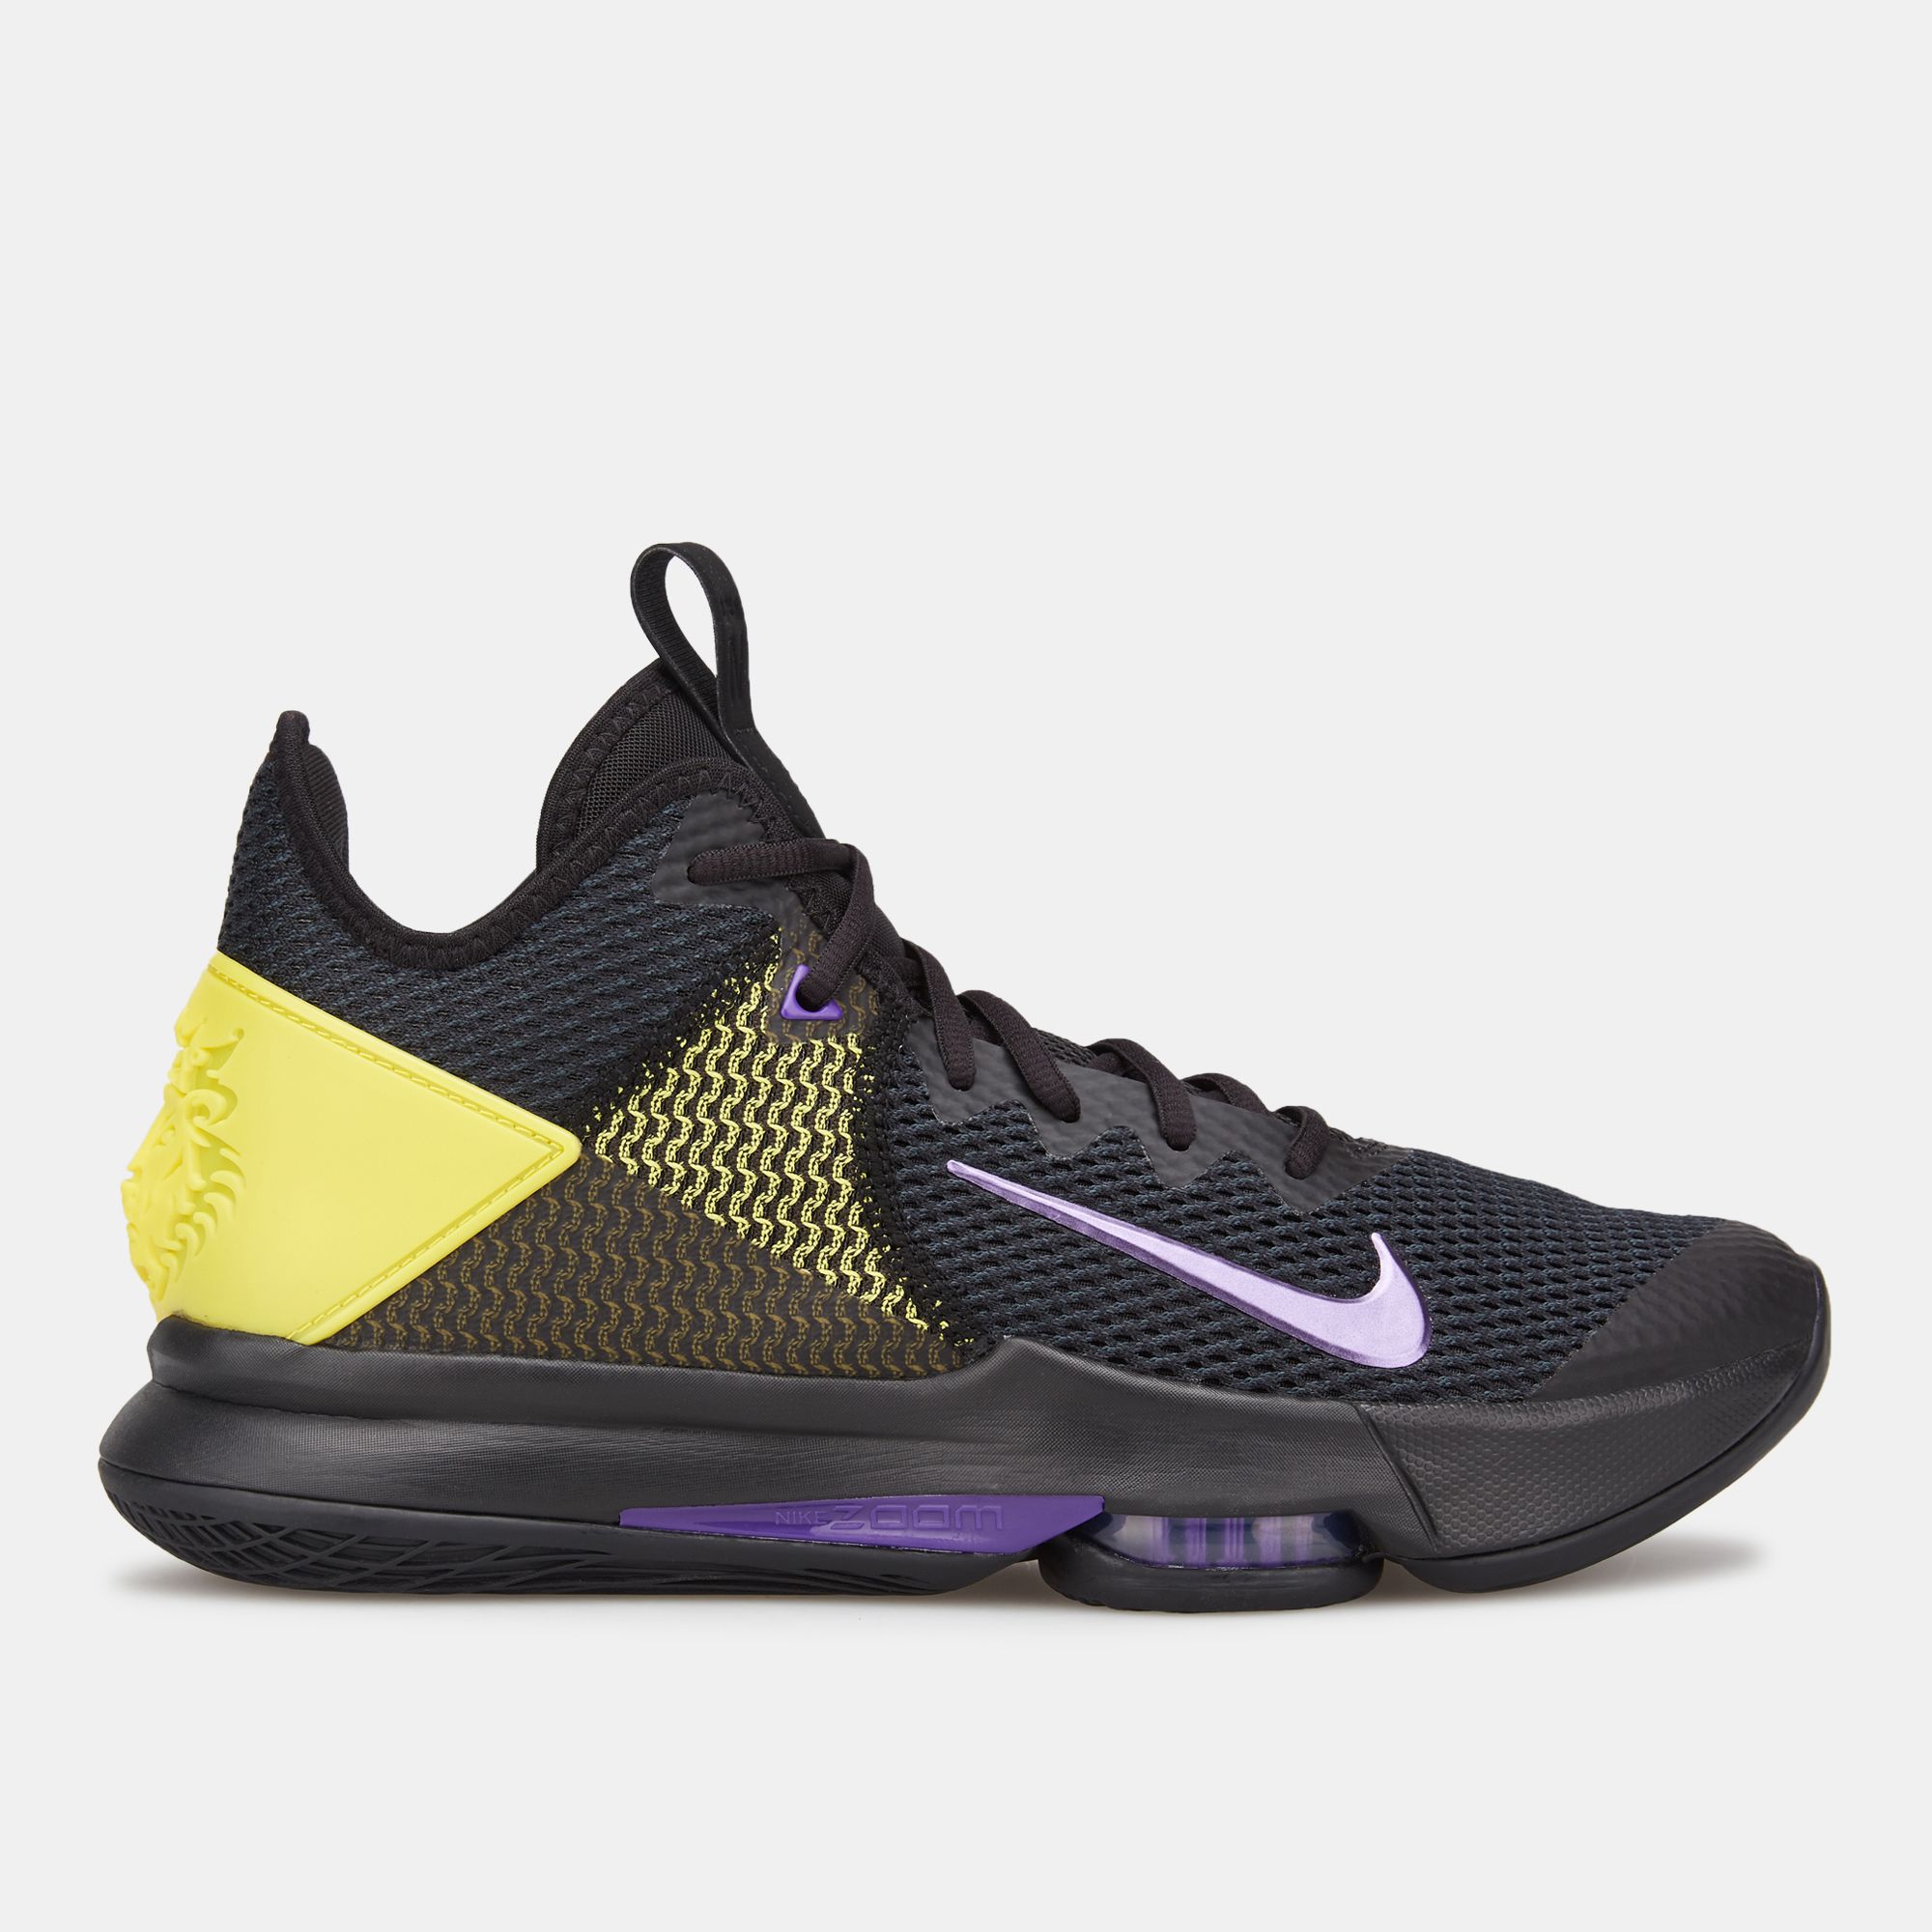 Nike Men's LeBron Witness IV Basketball Shoe | Basketball Shoes | Shoes ...